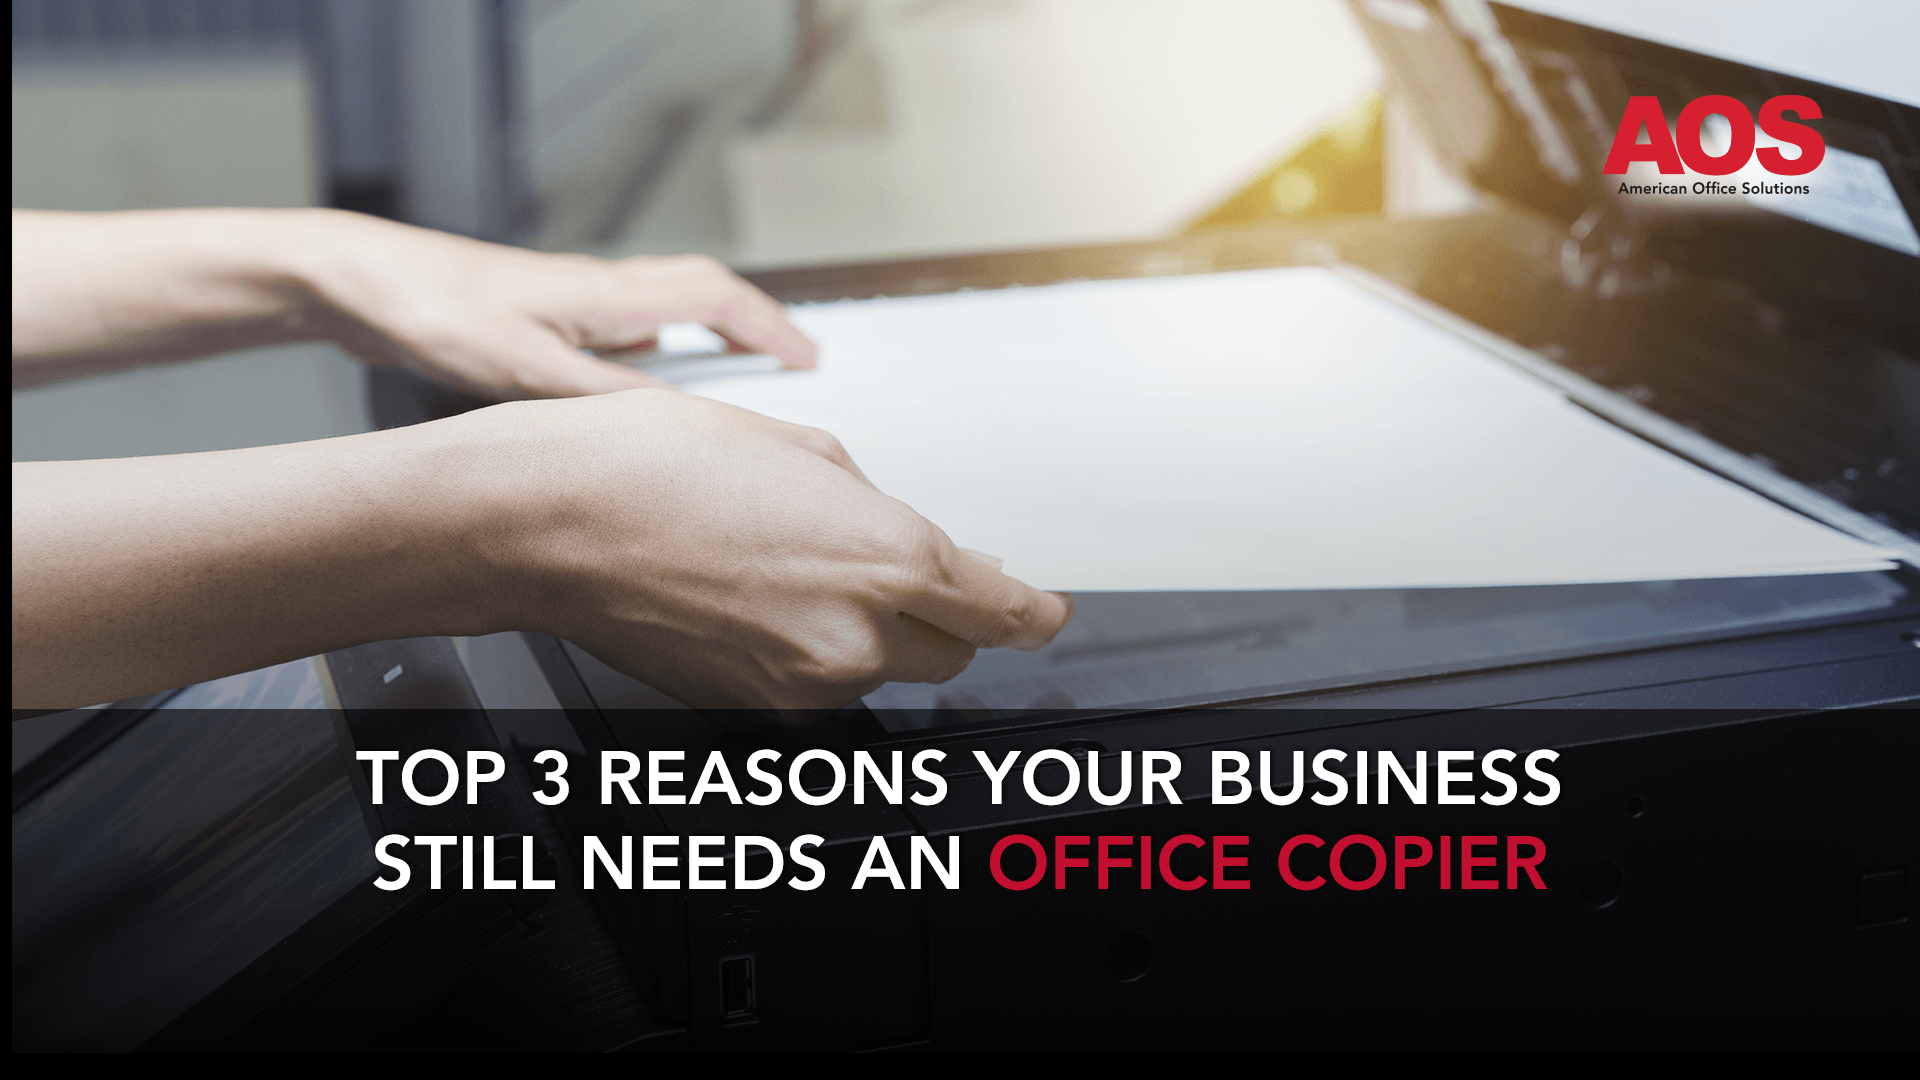 Top 3 Reasons Your Business Still Needs an Office Copier